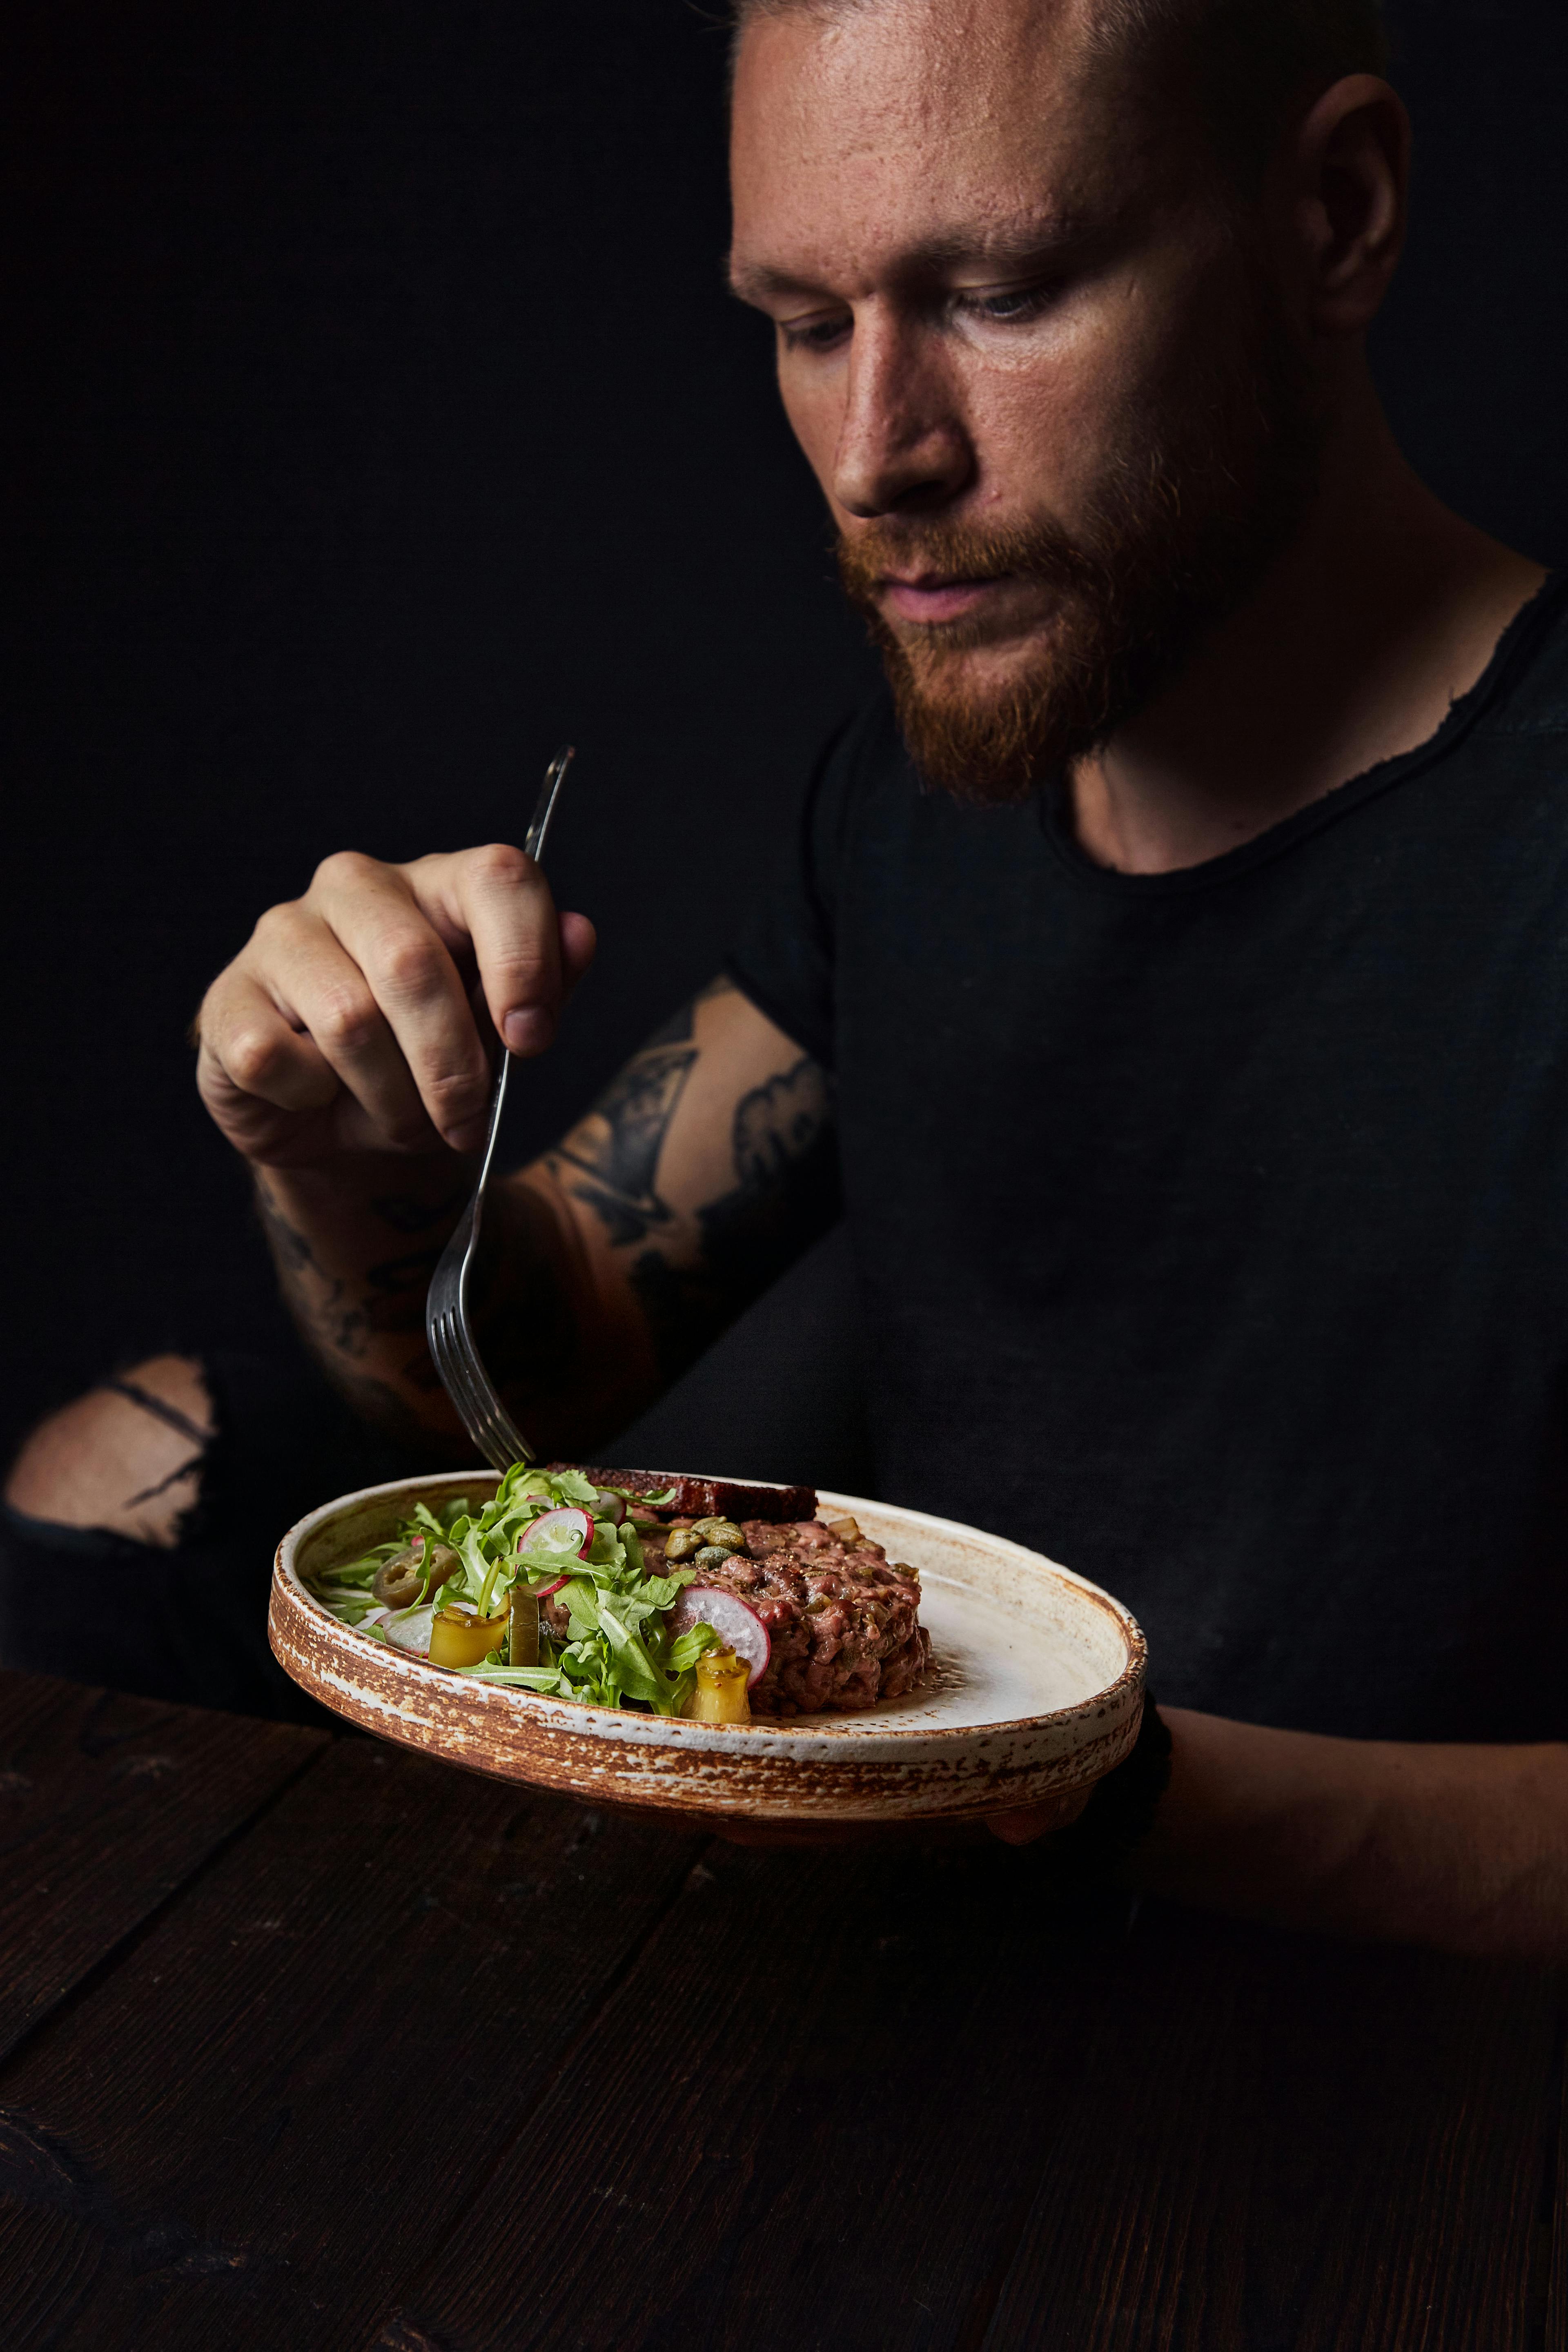 A man eating against a dark backdrop